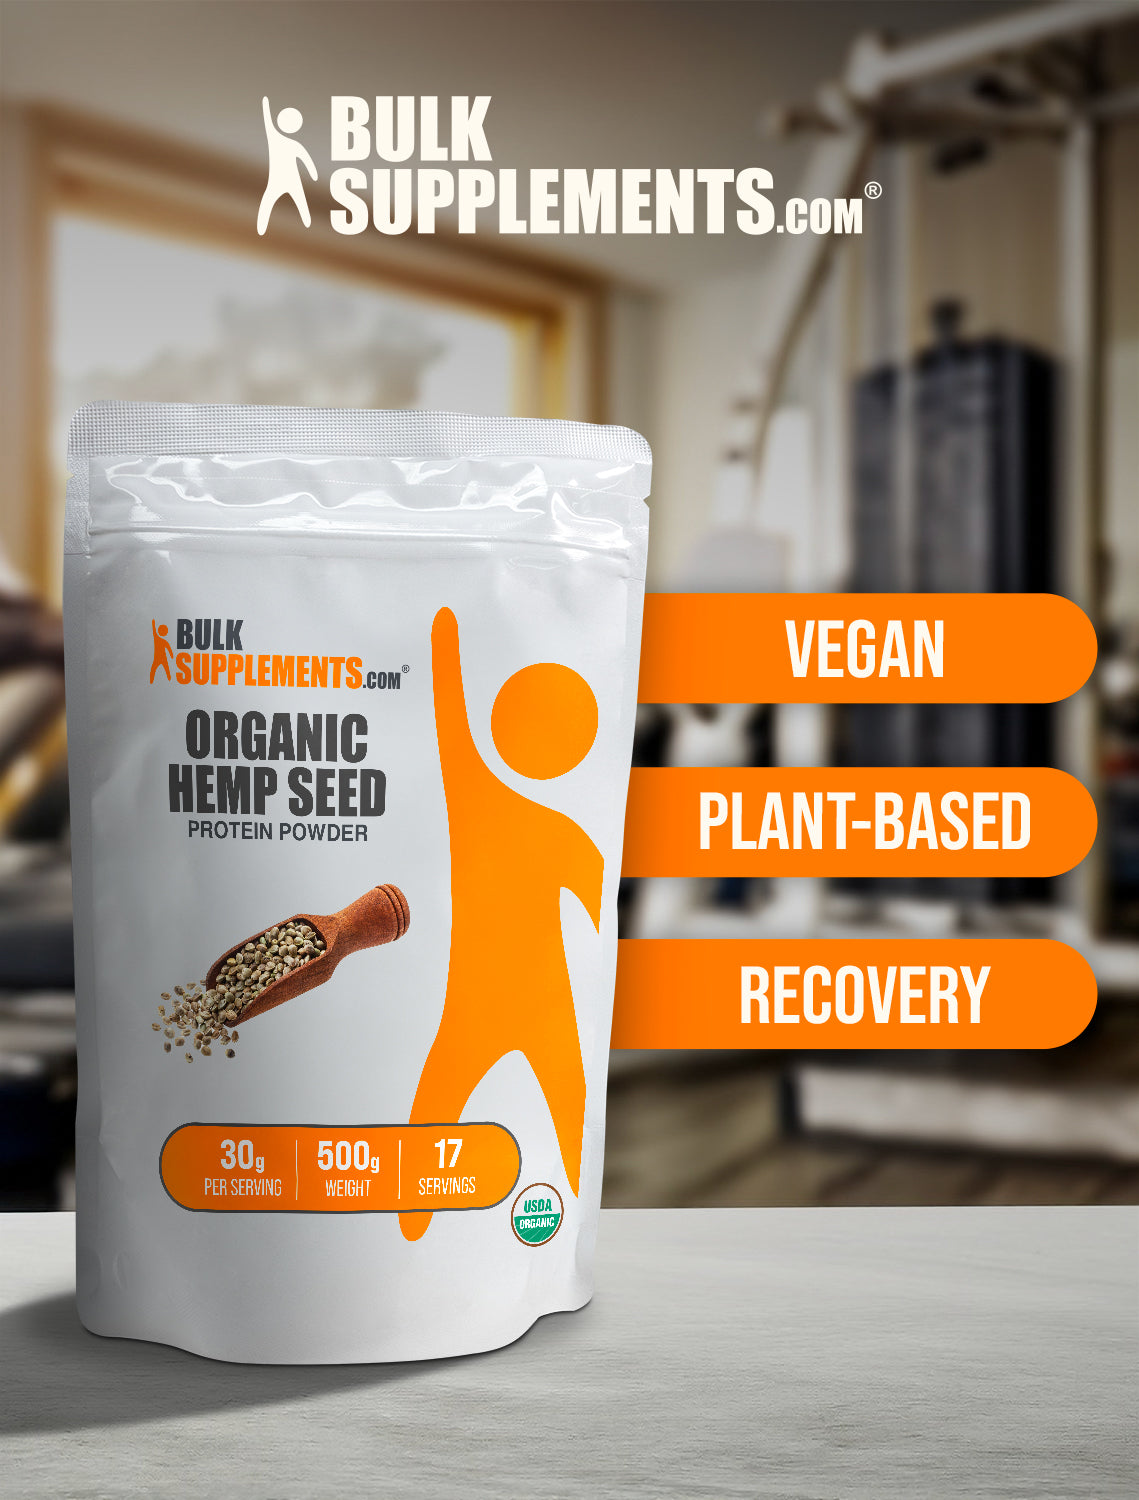 Organic hemp seed protein powder keyword image 500g